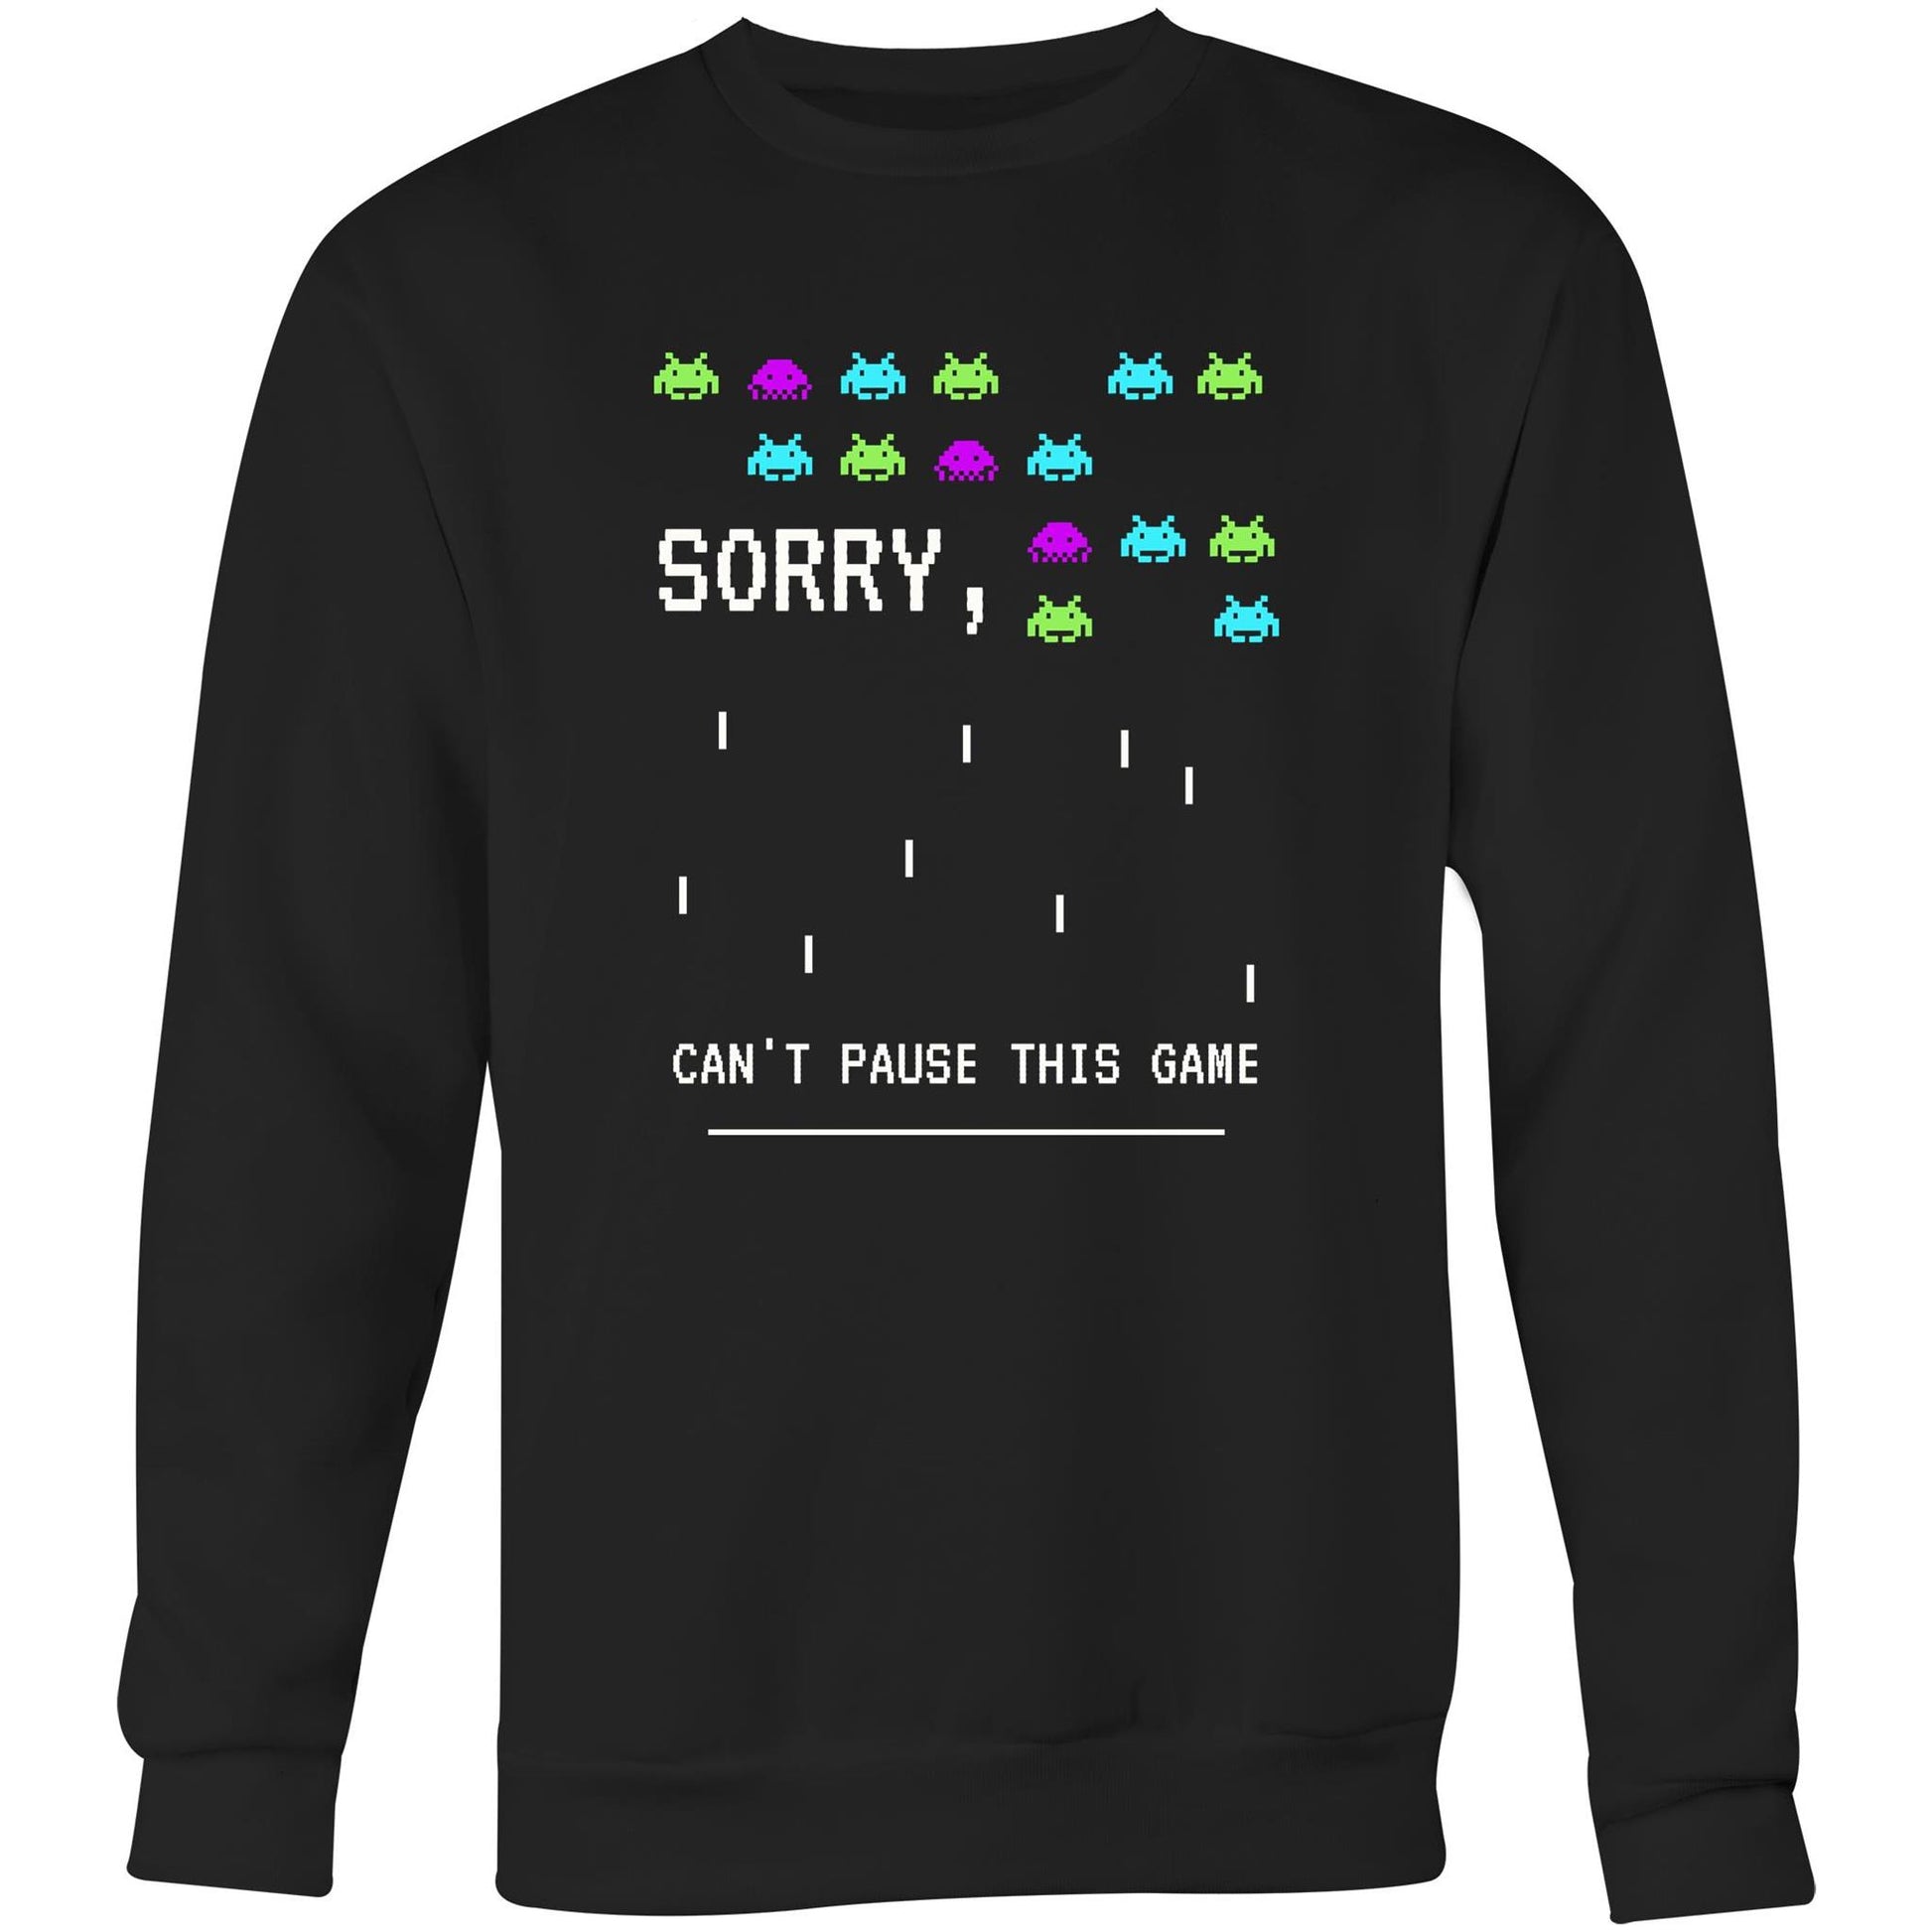 Sorry, Can't Pause This Game - Crew Sweatshirt Black Sweatshirt Games